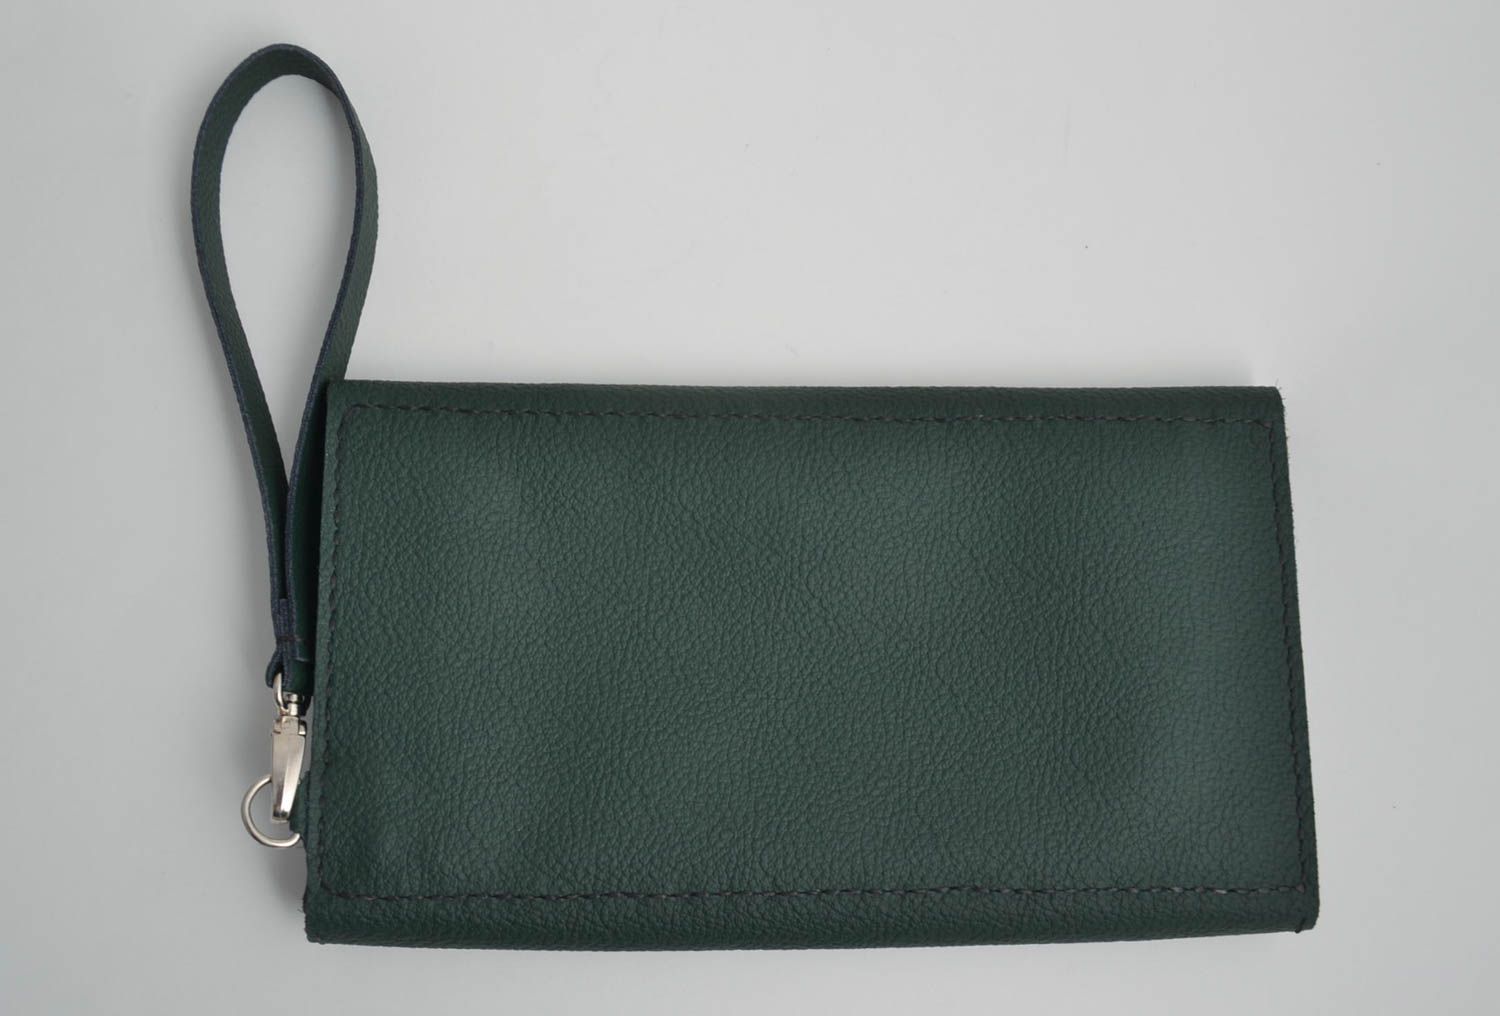 Unusual handmade leather clutch bag leather handbag leather goods gift ideas photo 2